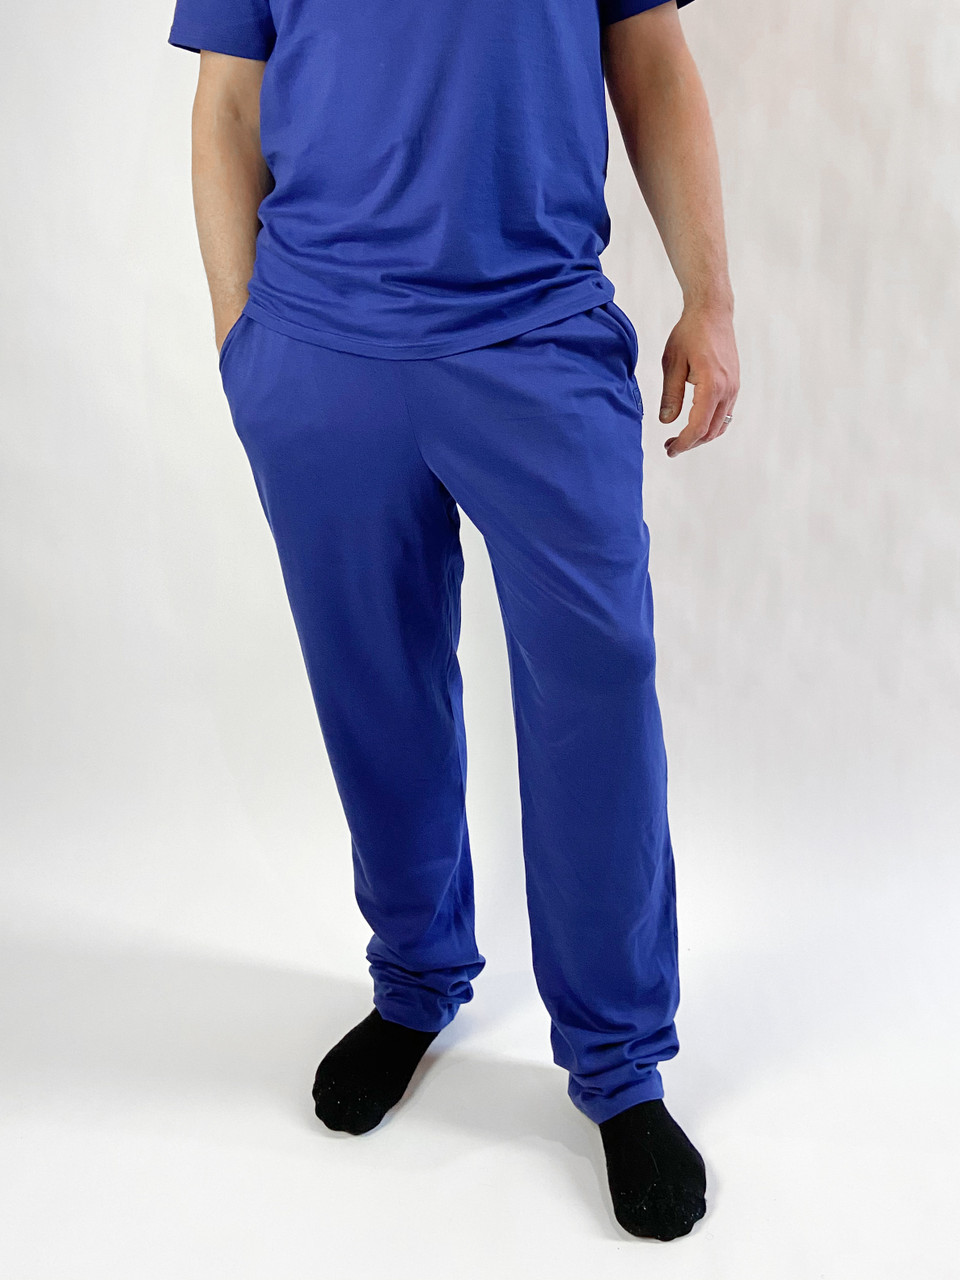 Intimo Men's Cotton/Poly Blend Jersey Knit Lounge Pants Pajama Pants -  Walmart.com